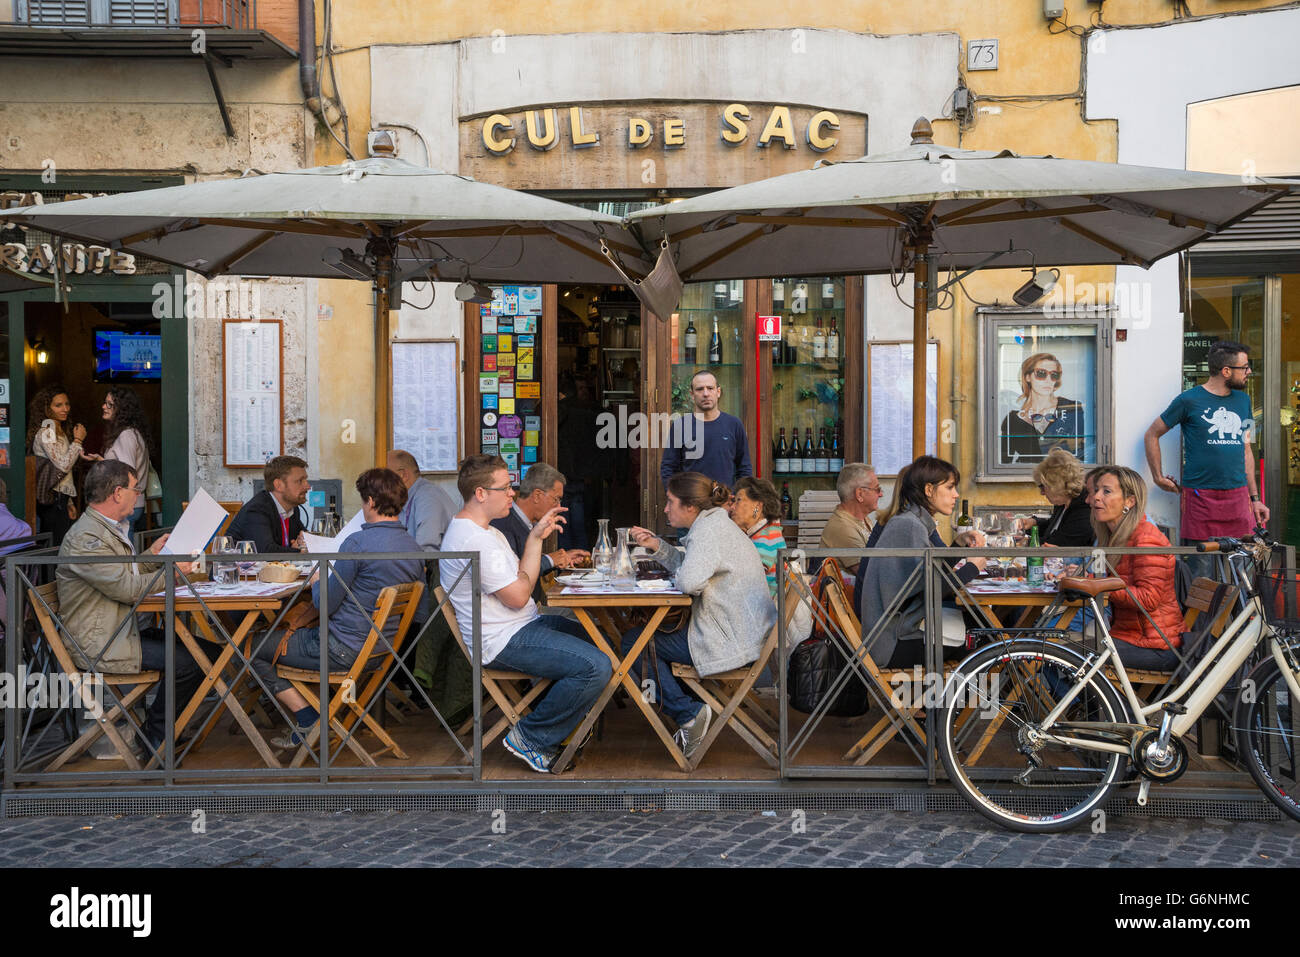 Cul de Sac restaurant on Piazza Pasquino Stock Photo